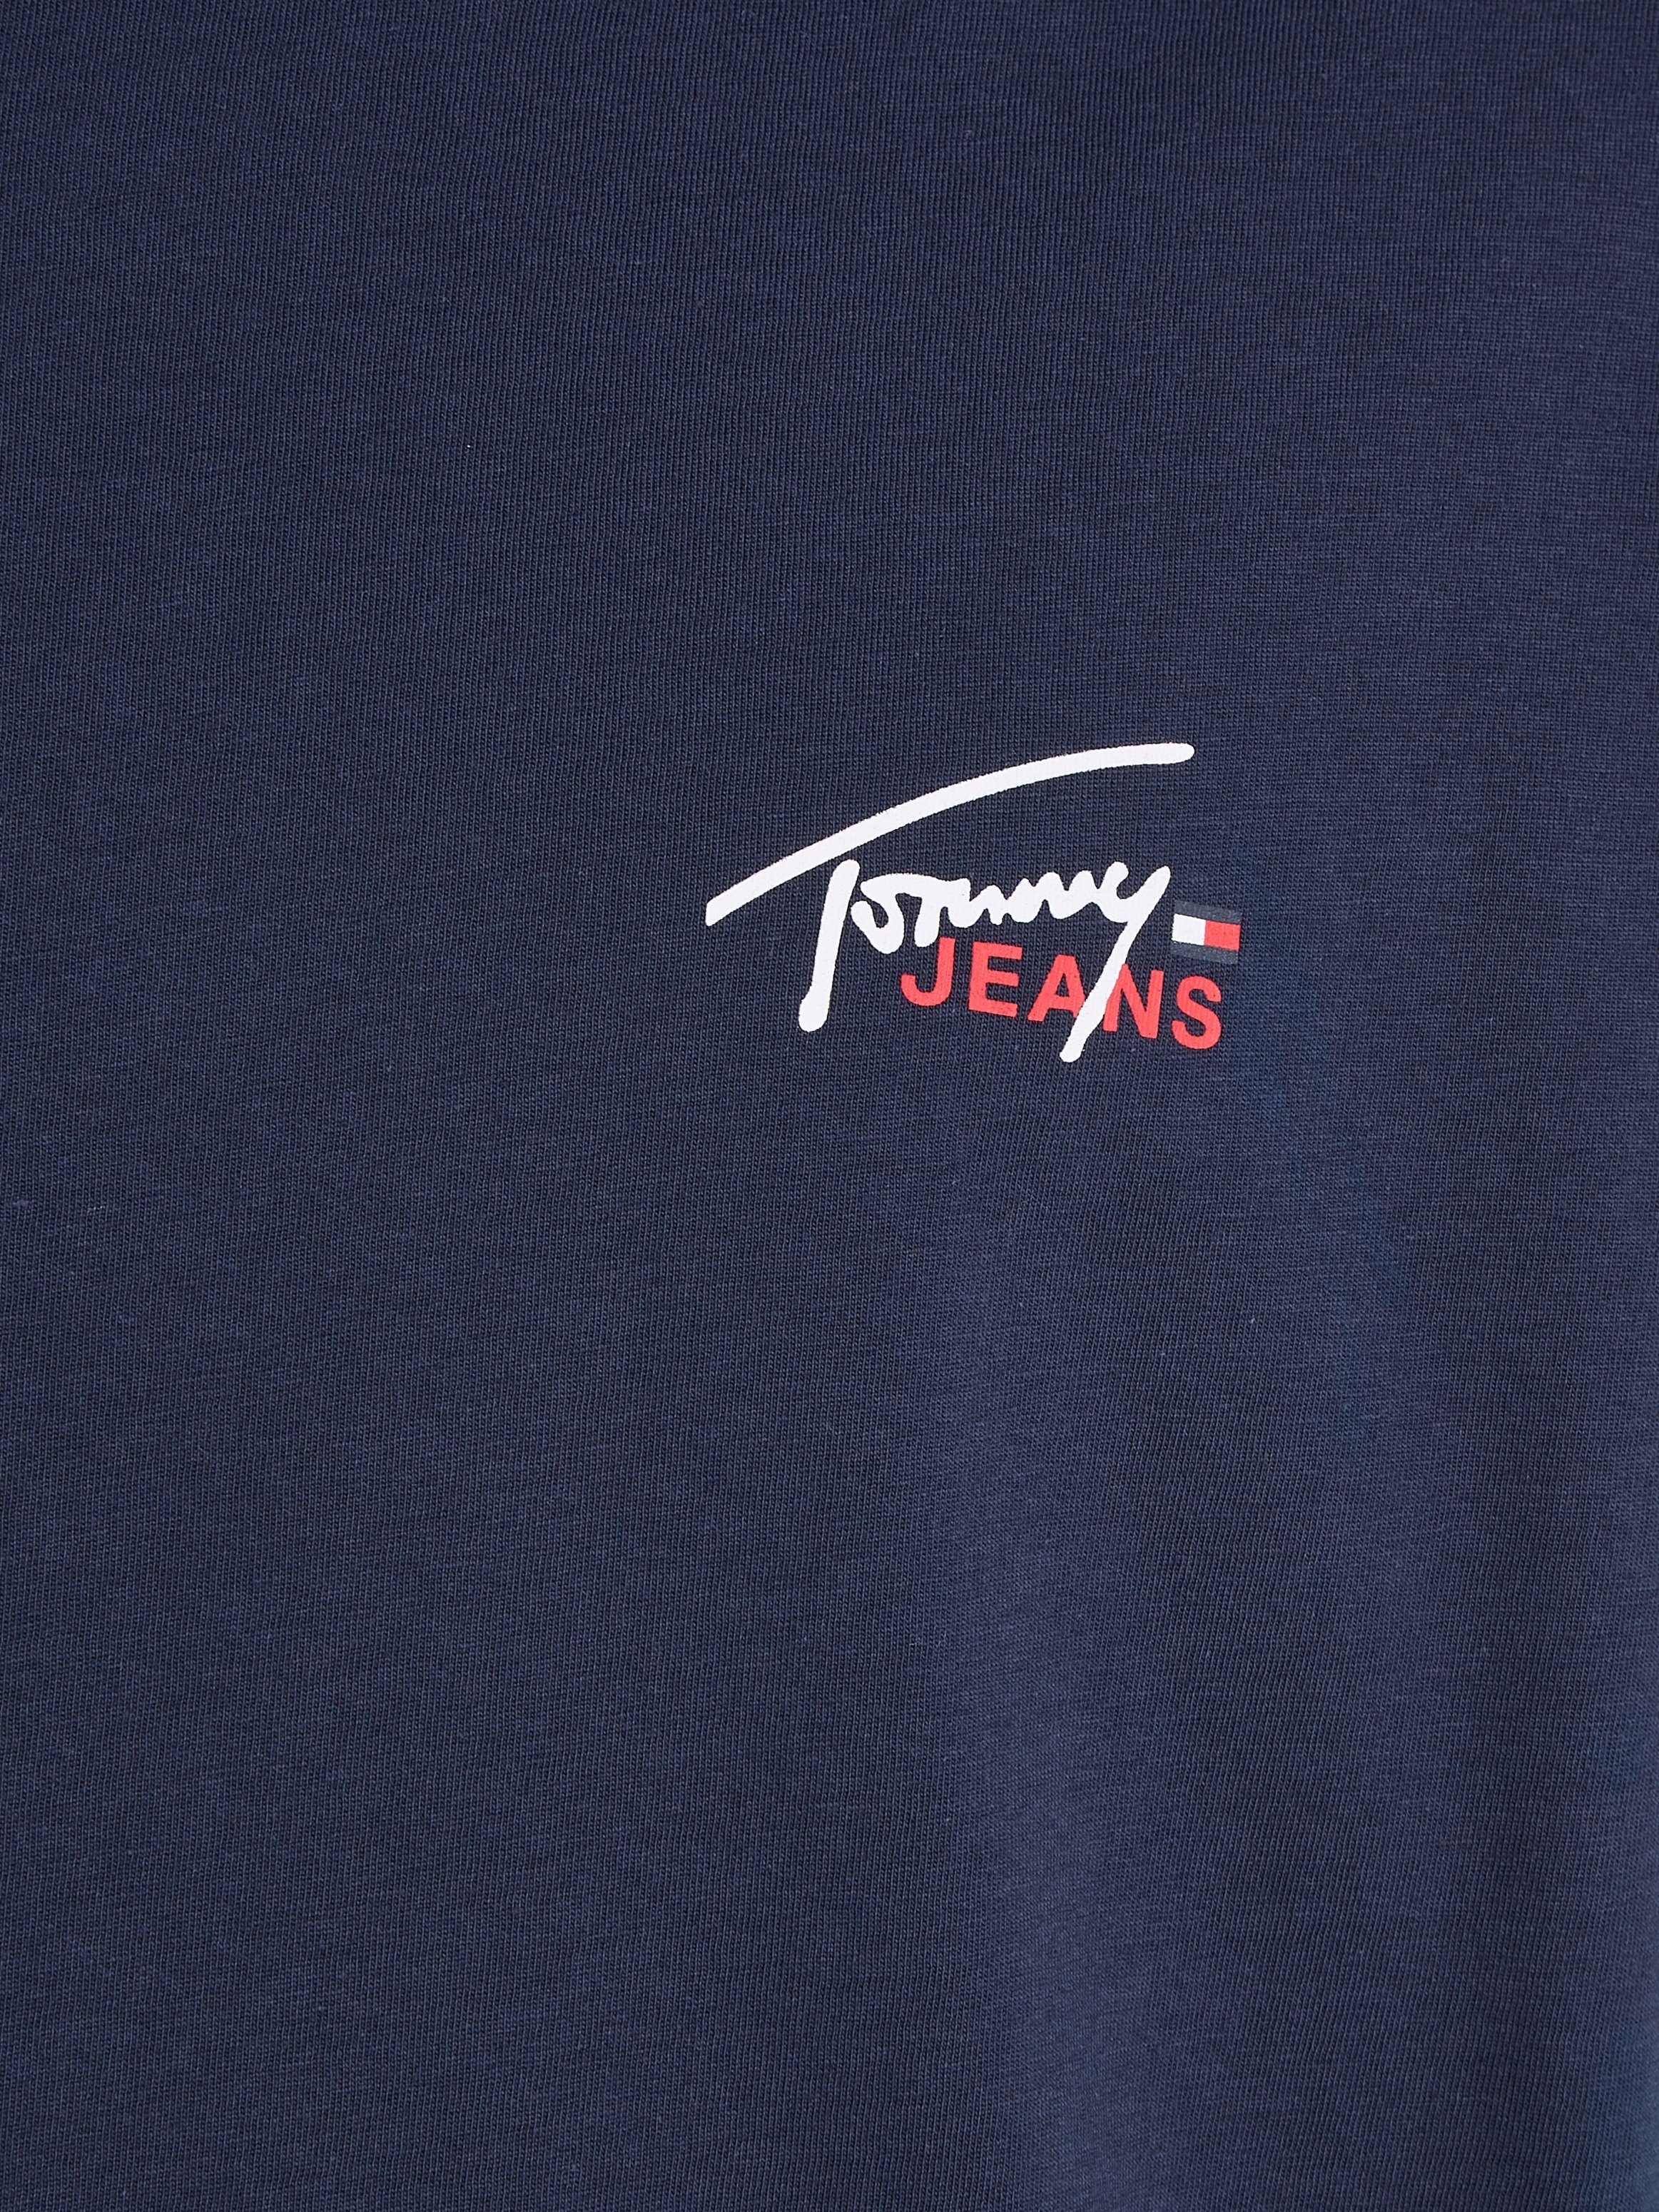 FLAG Twilight Jeans SMALL Tommy TEE TJM CLSC Navy T-Shirt